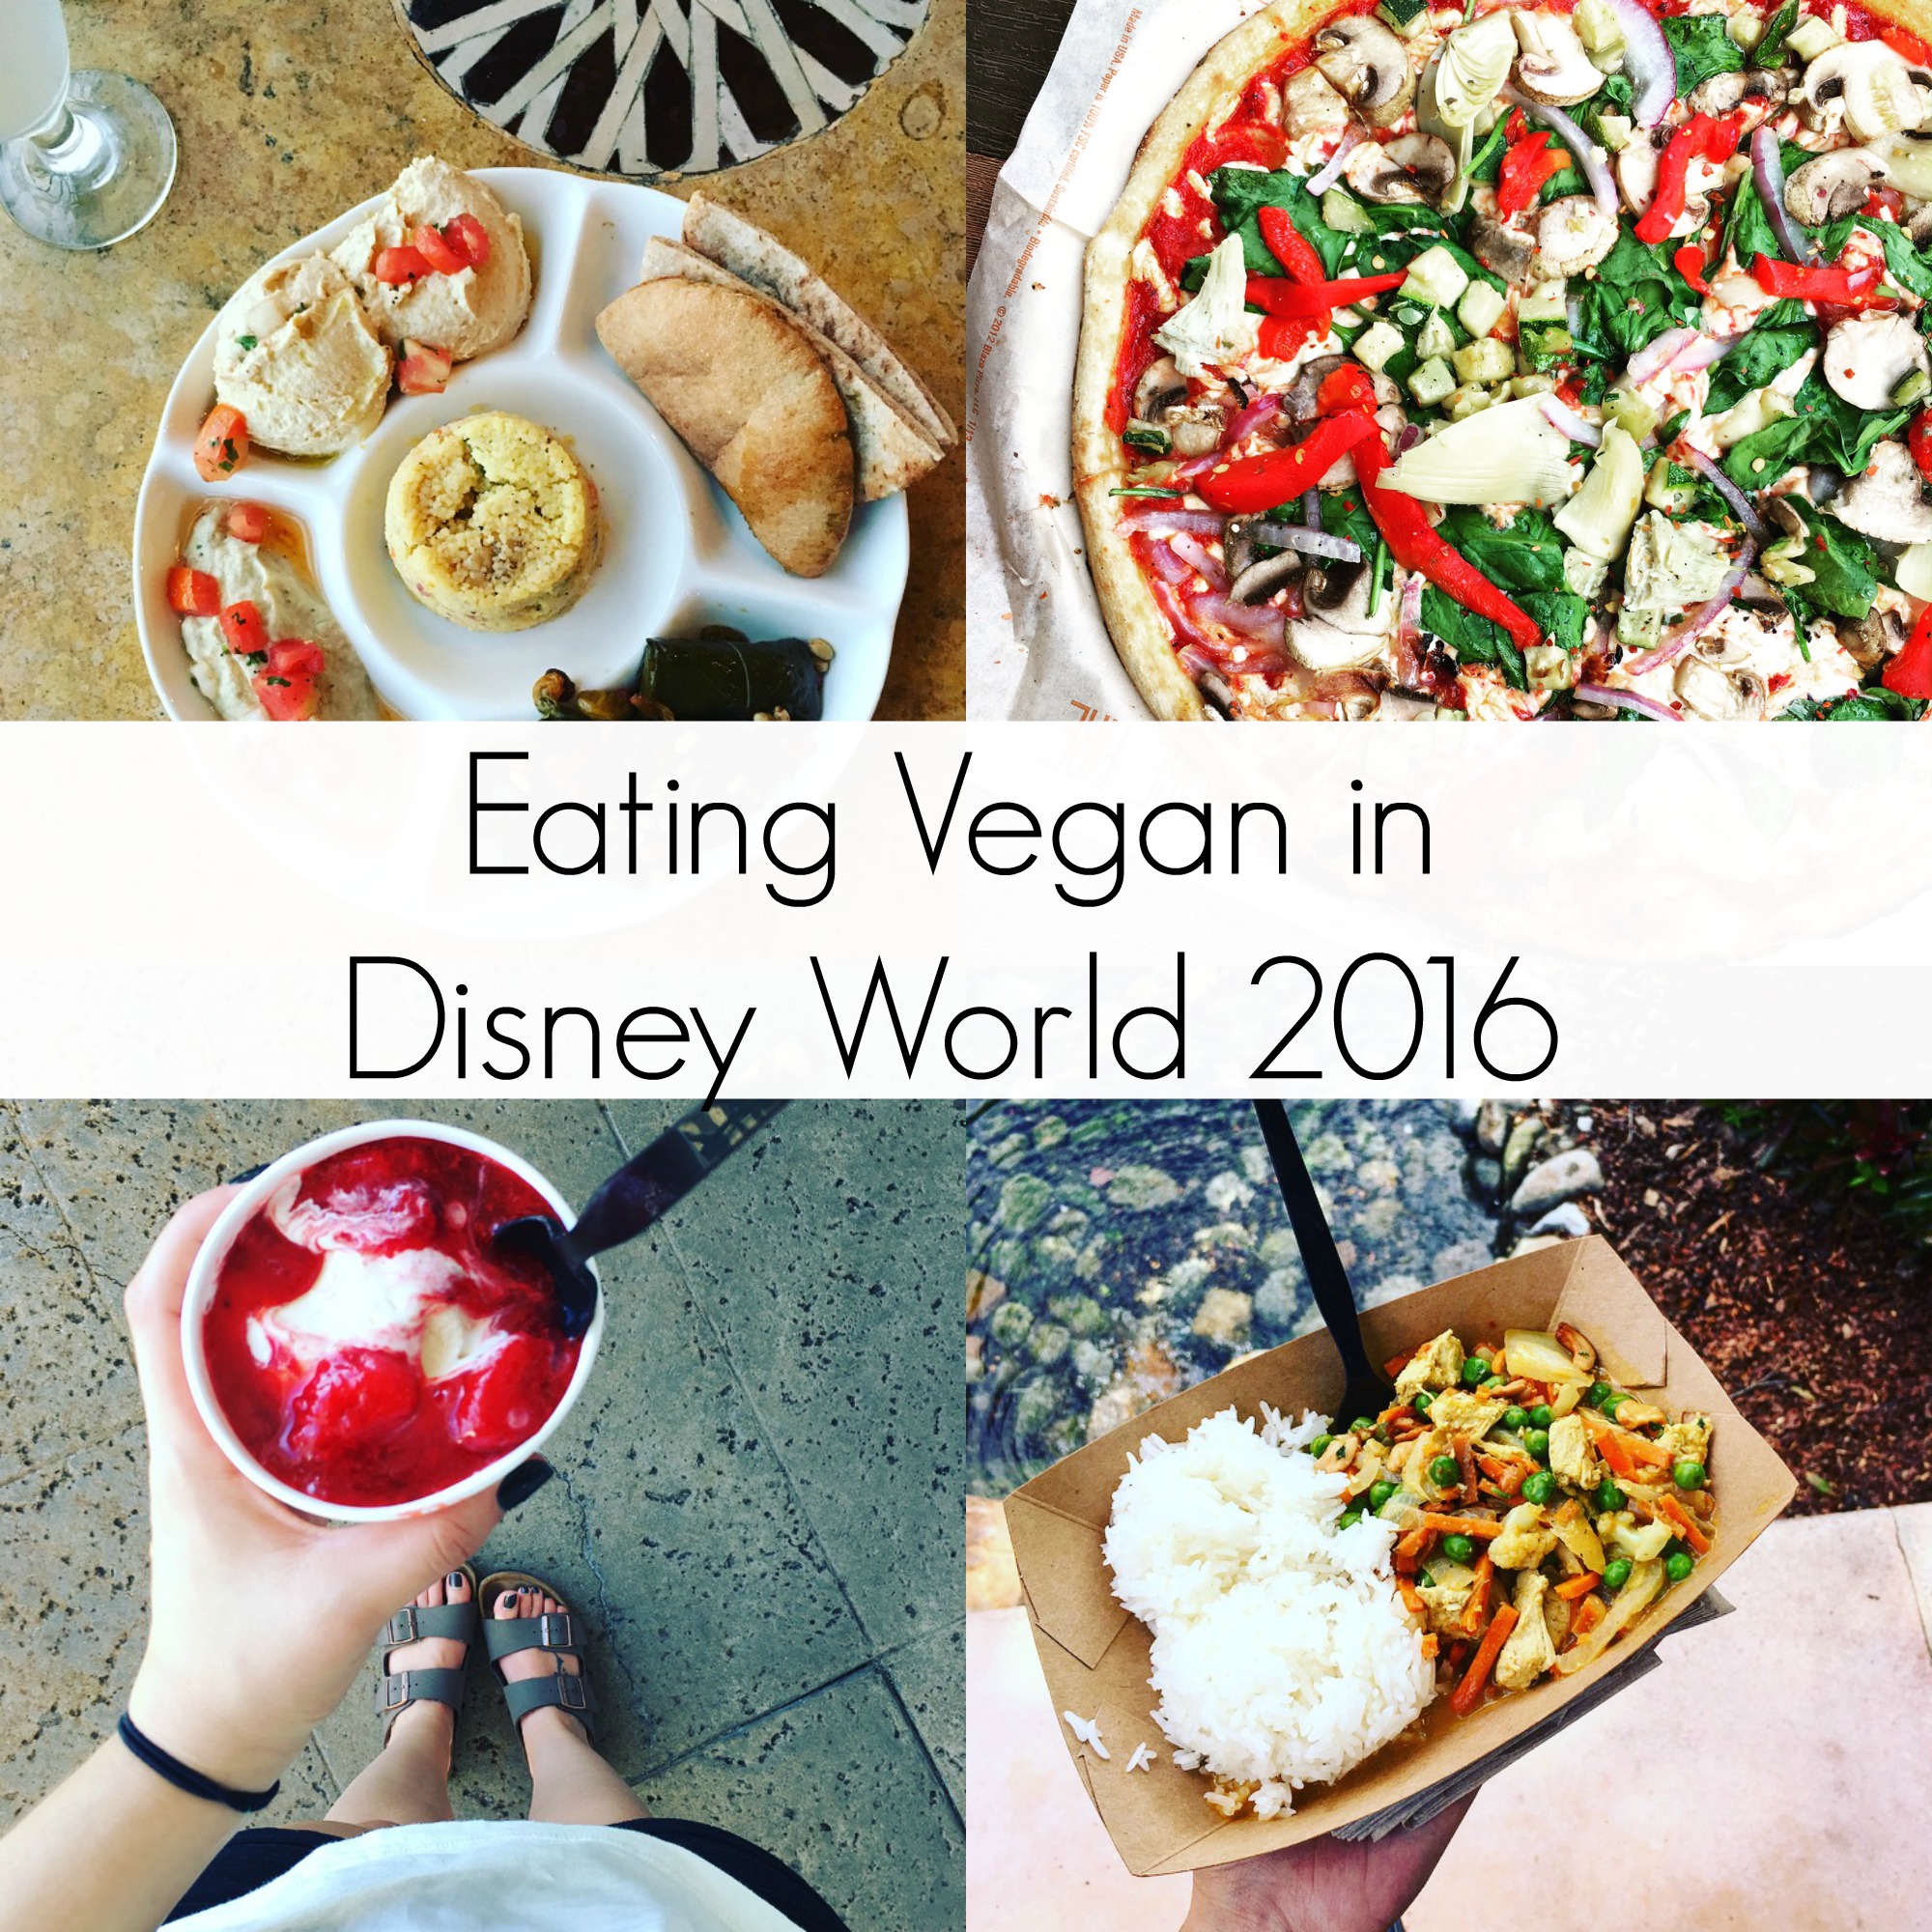 Eating Vegan in Disney World 2016